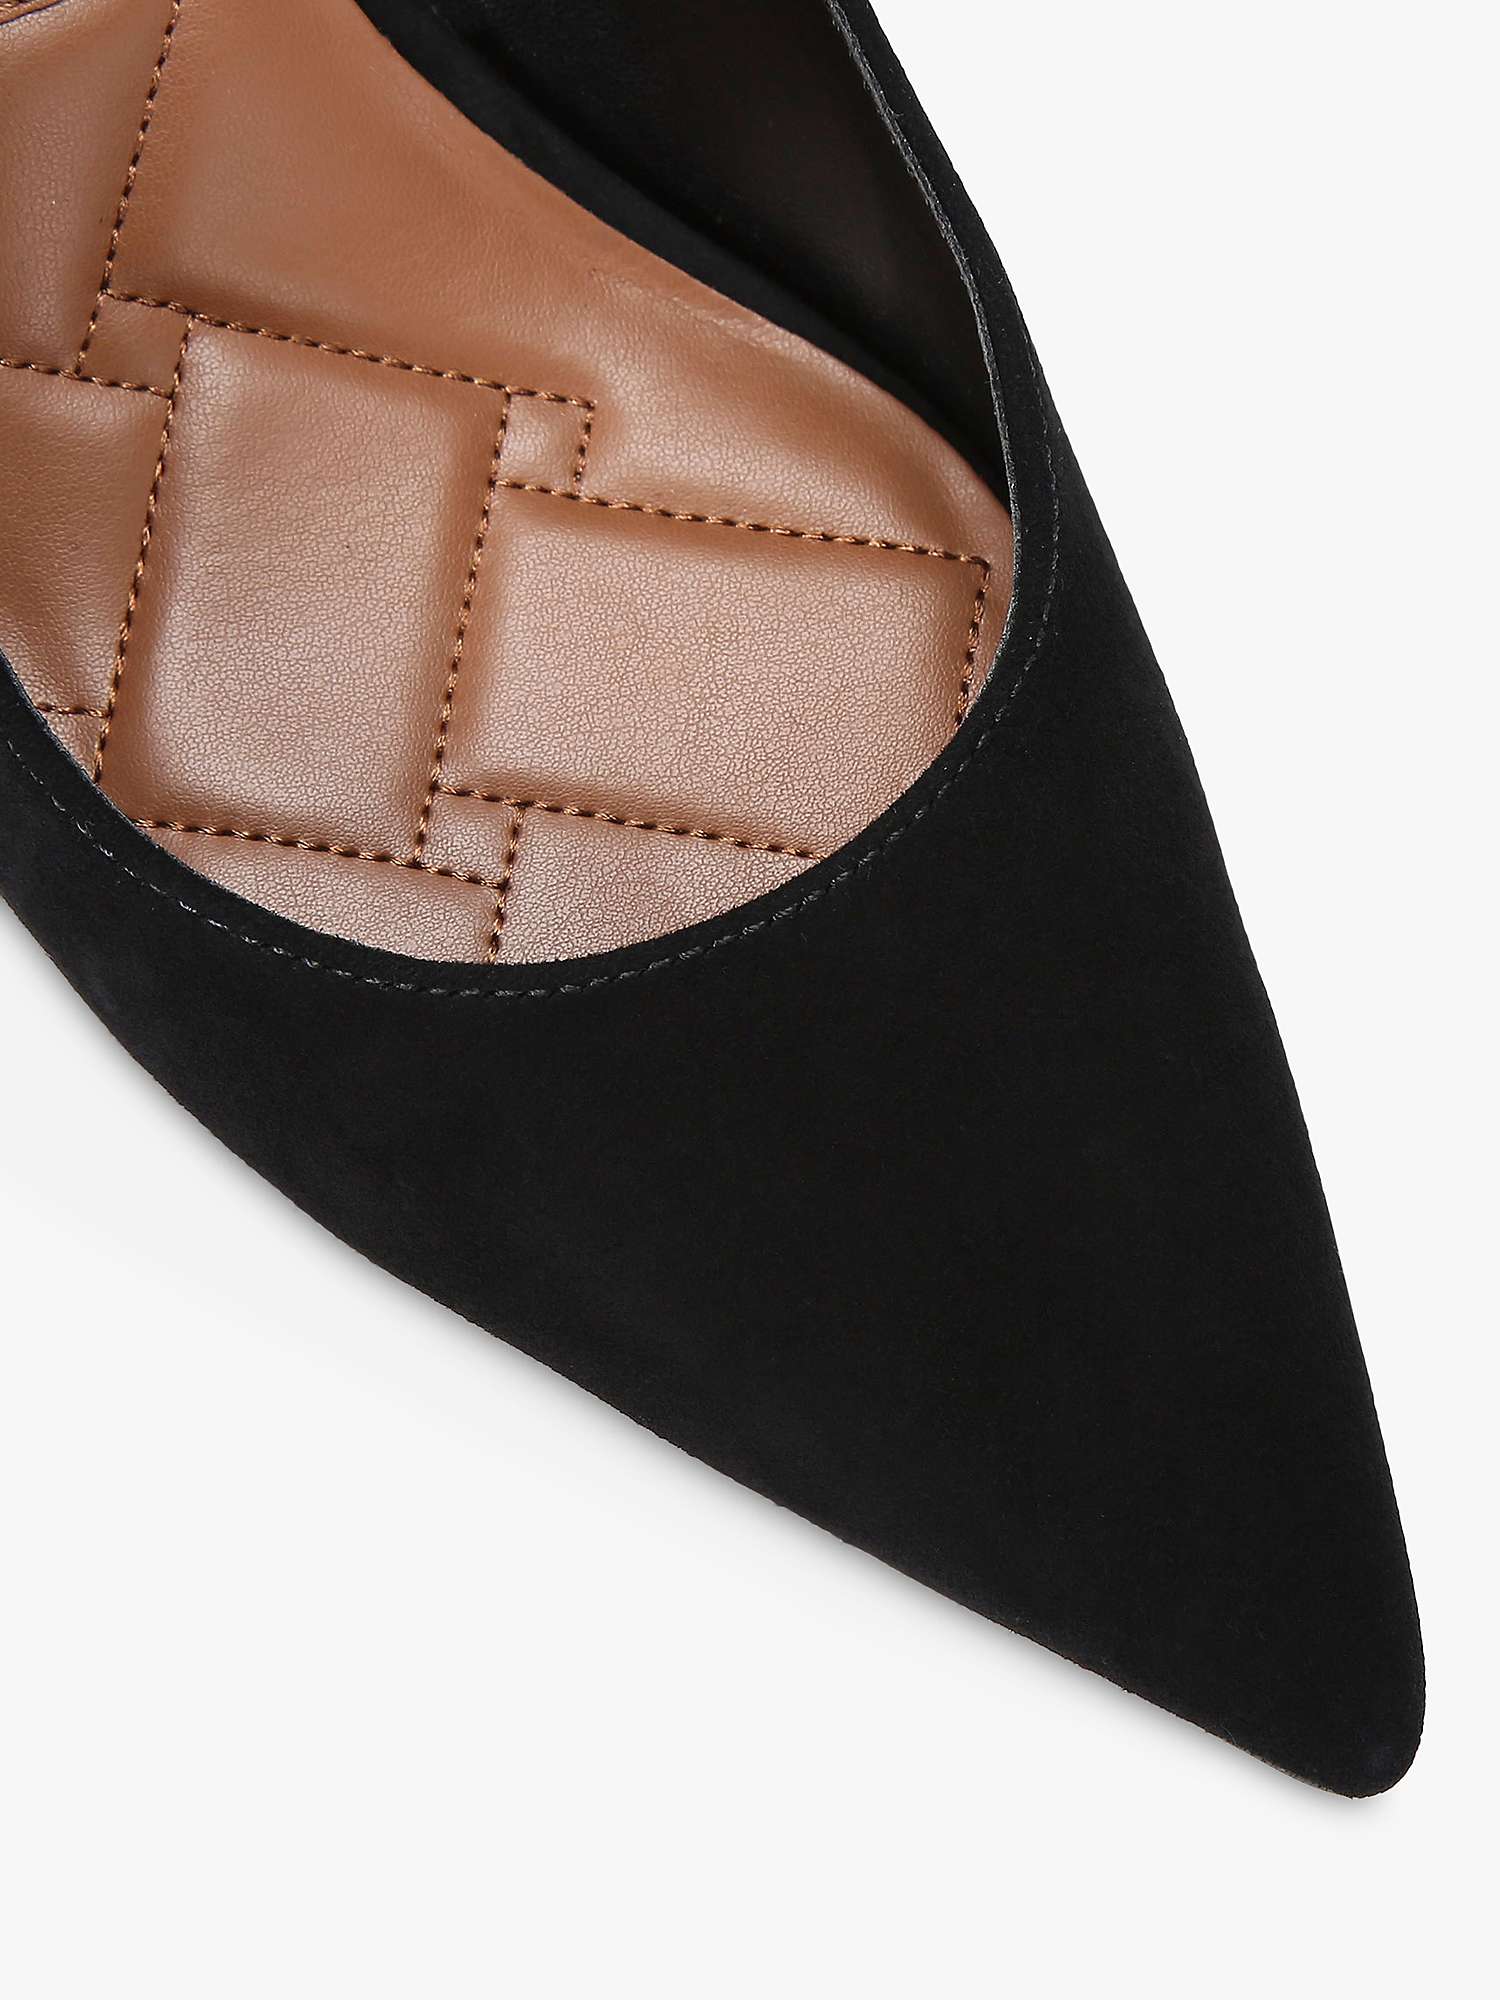 Buy Kurt Geiger London Belgravia Suede Slingback Court Shoes, Black Online at johnlewis.com